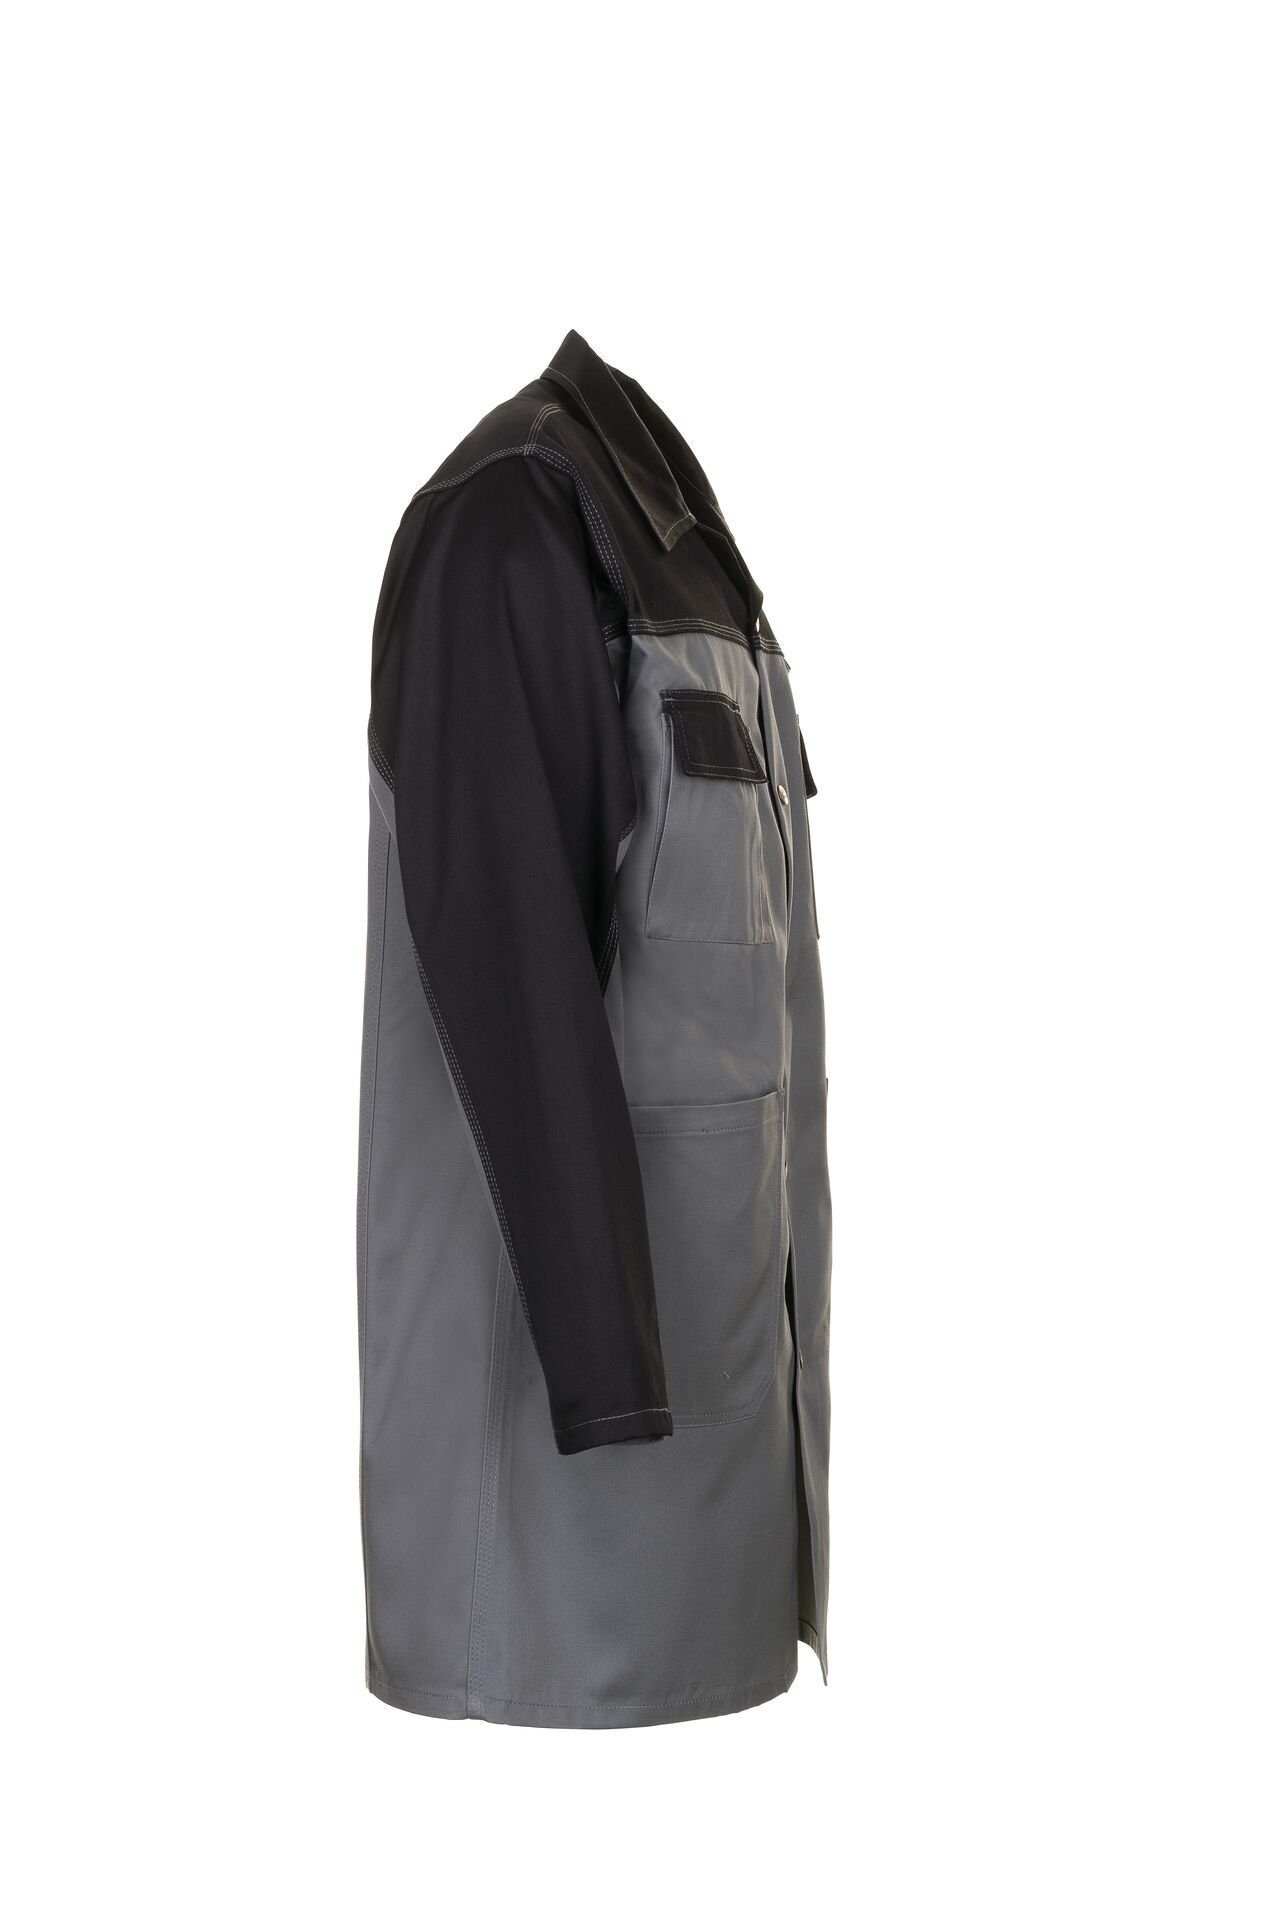 Größe Planam Berufsmantel Tristep 102 grau/schwarz Arbeitsjacke